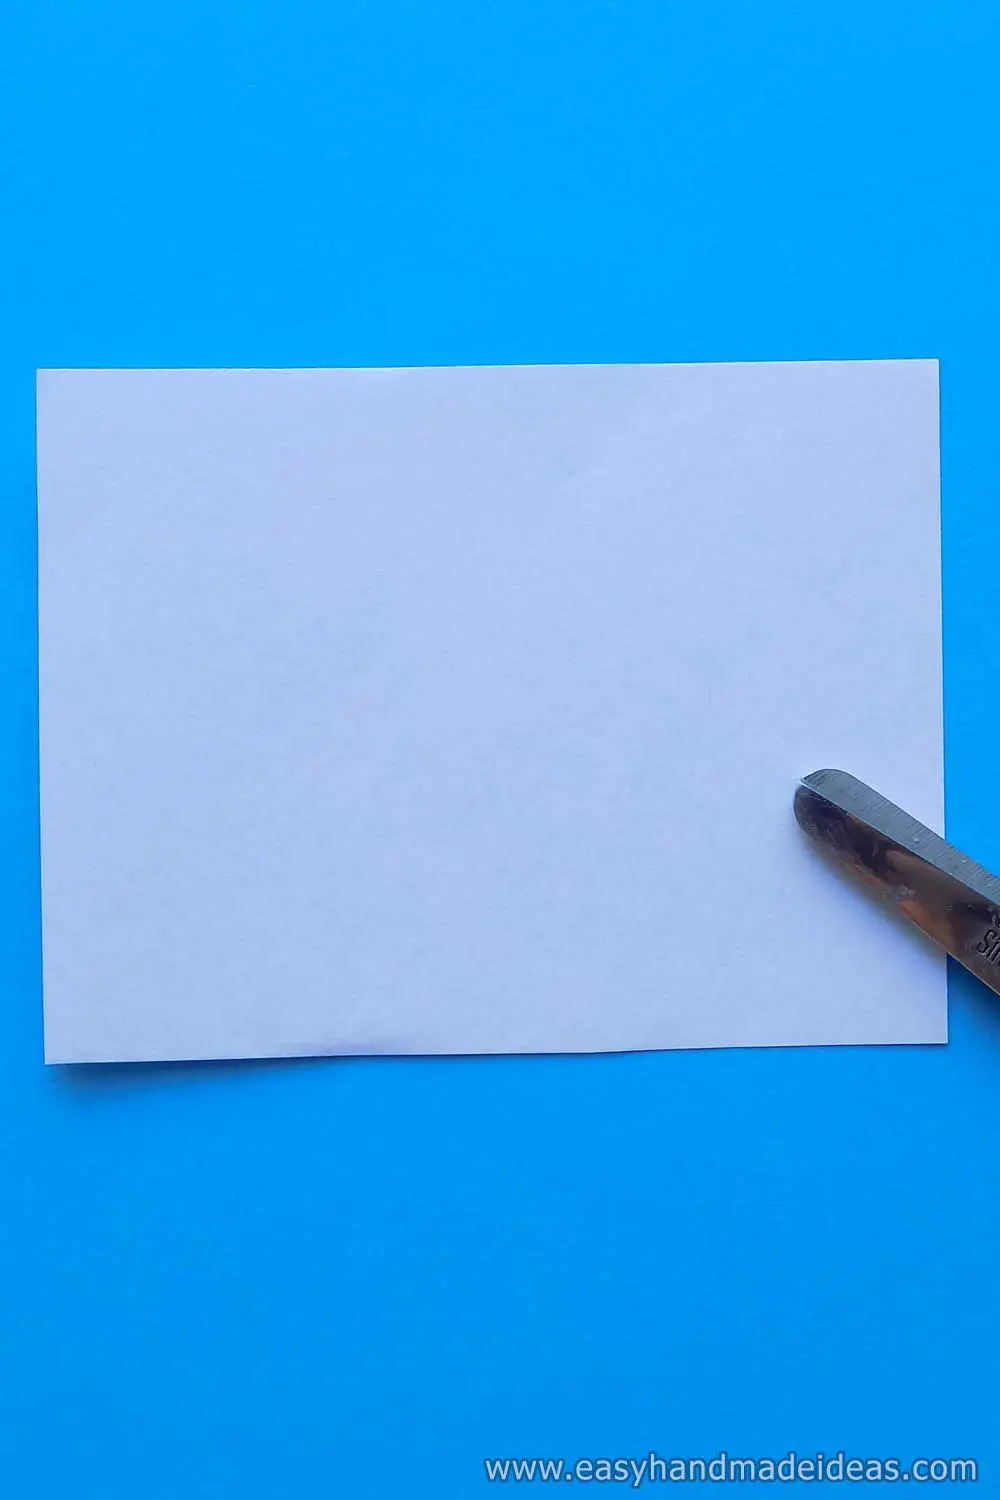 White Sheet of Paper